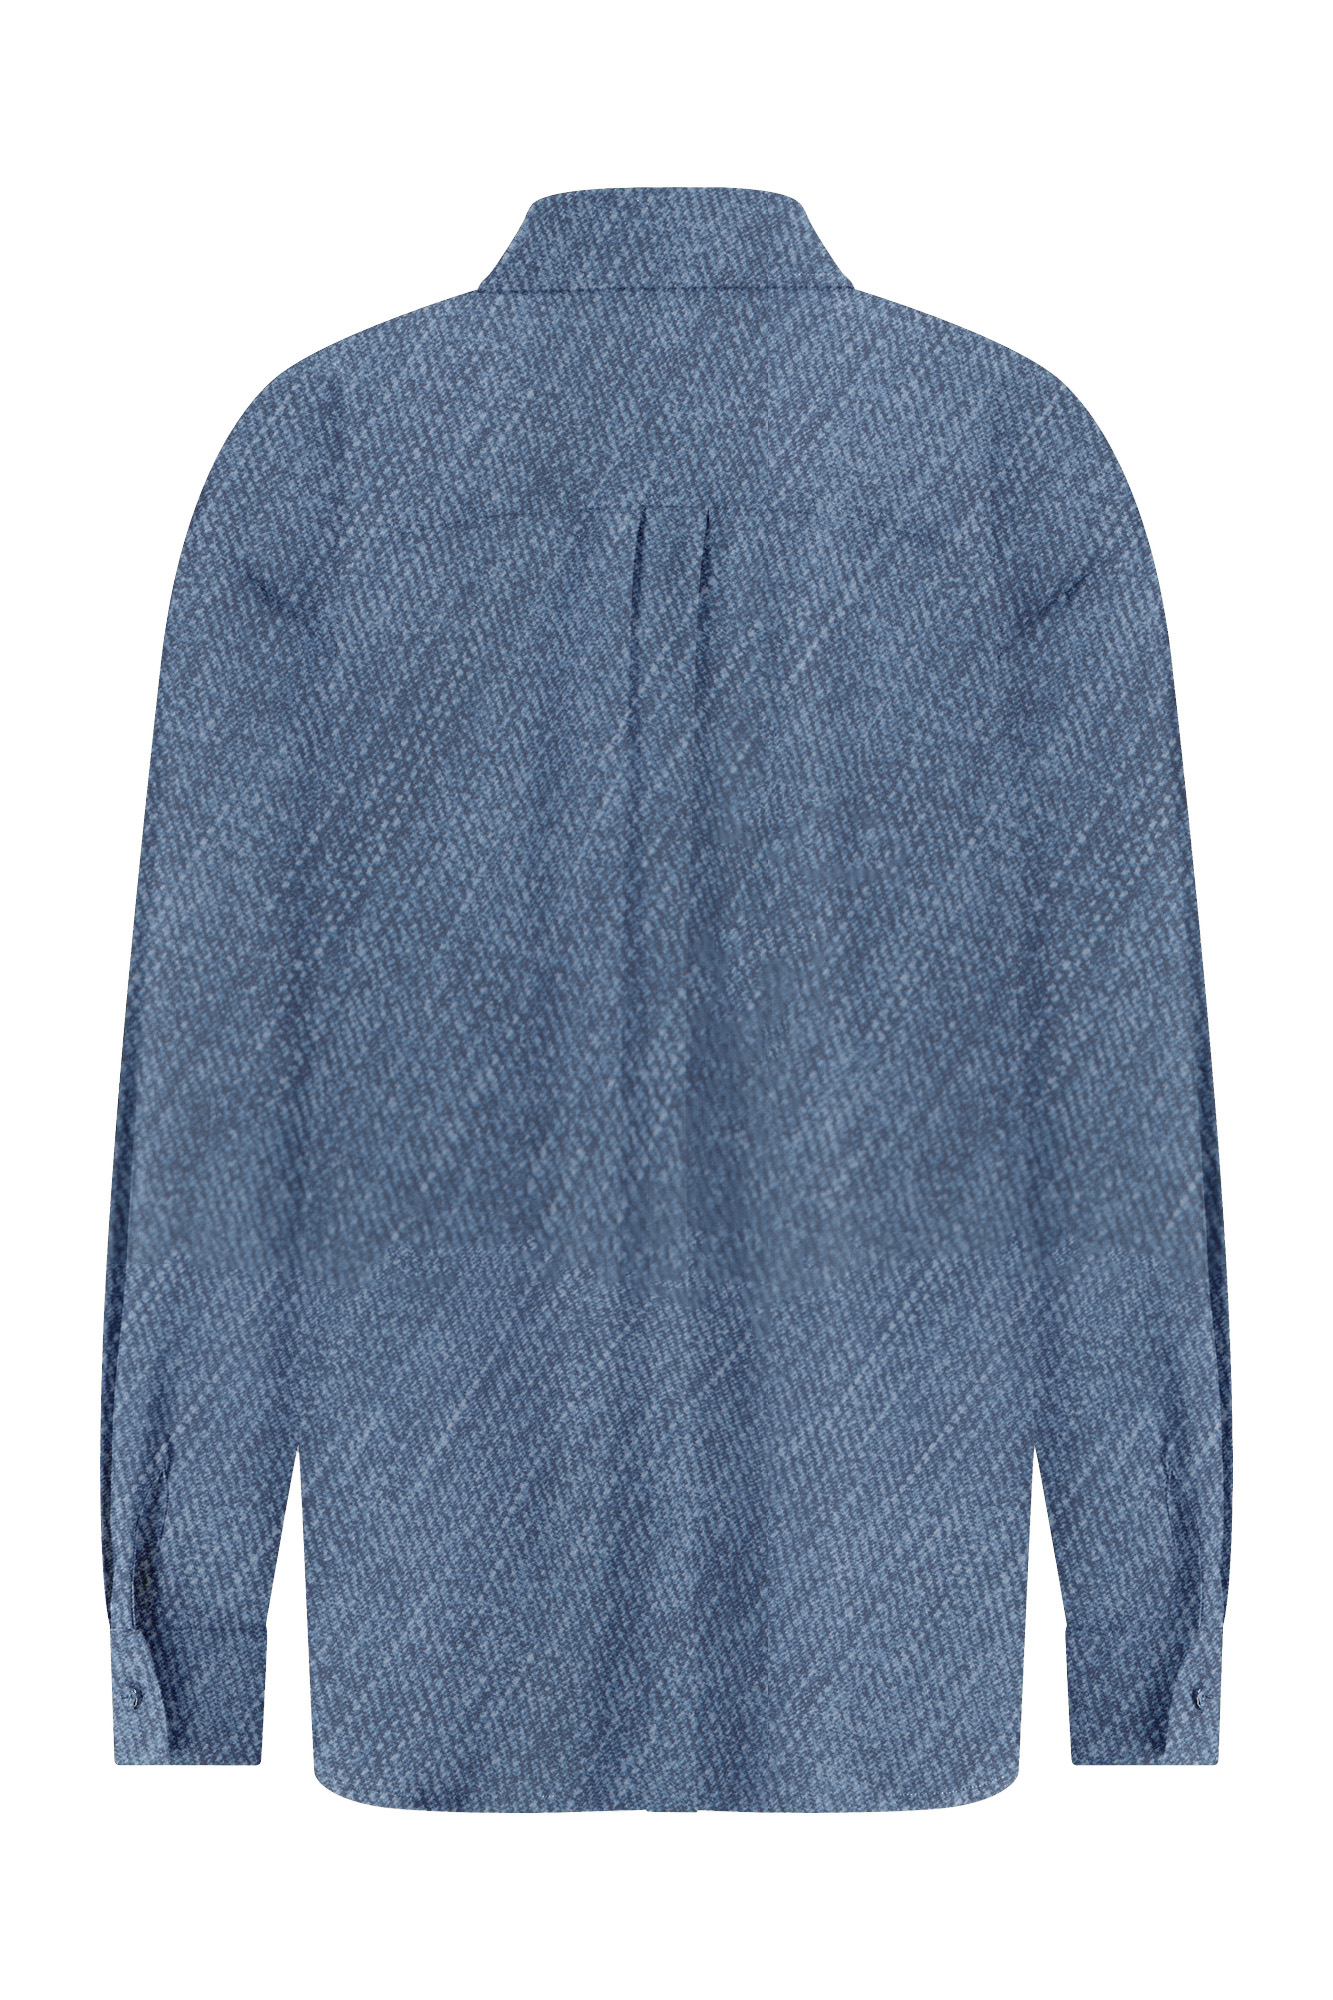 Studio Anneloes Denisa jeans blouse Blauw-1 5